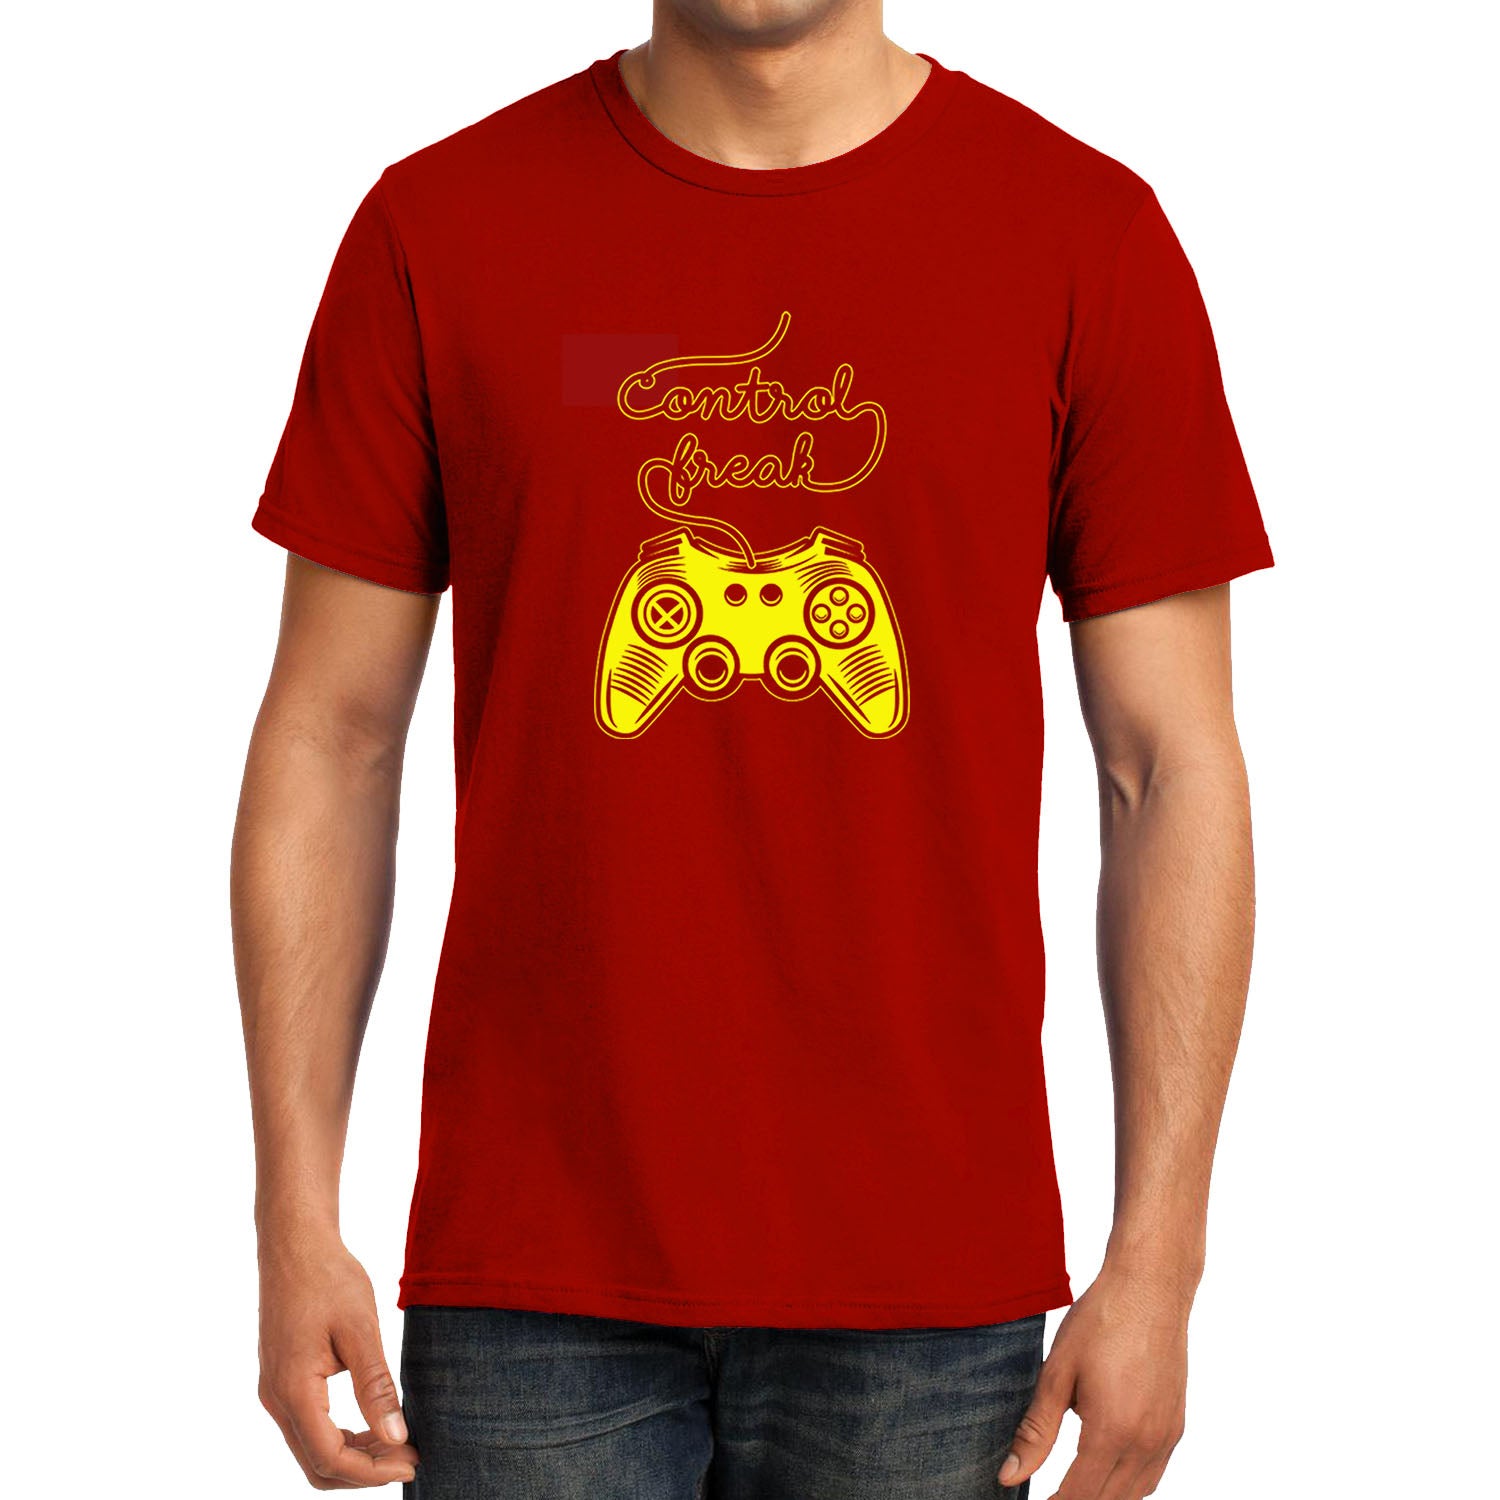 Control Freak Gamer Shirt